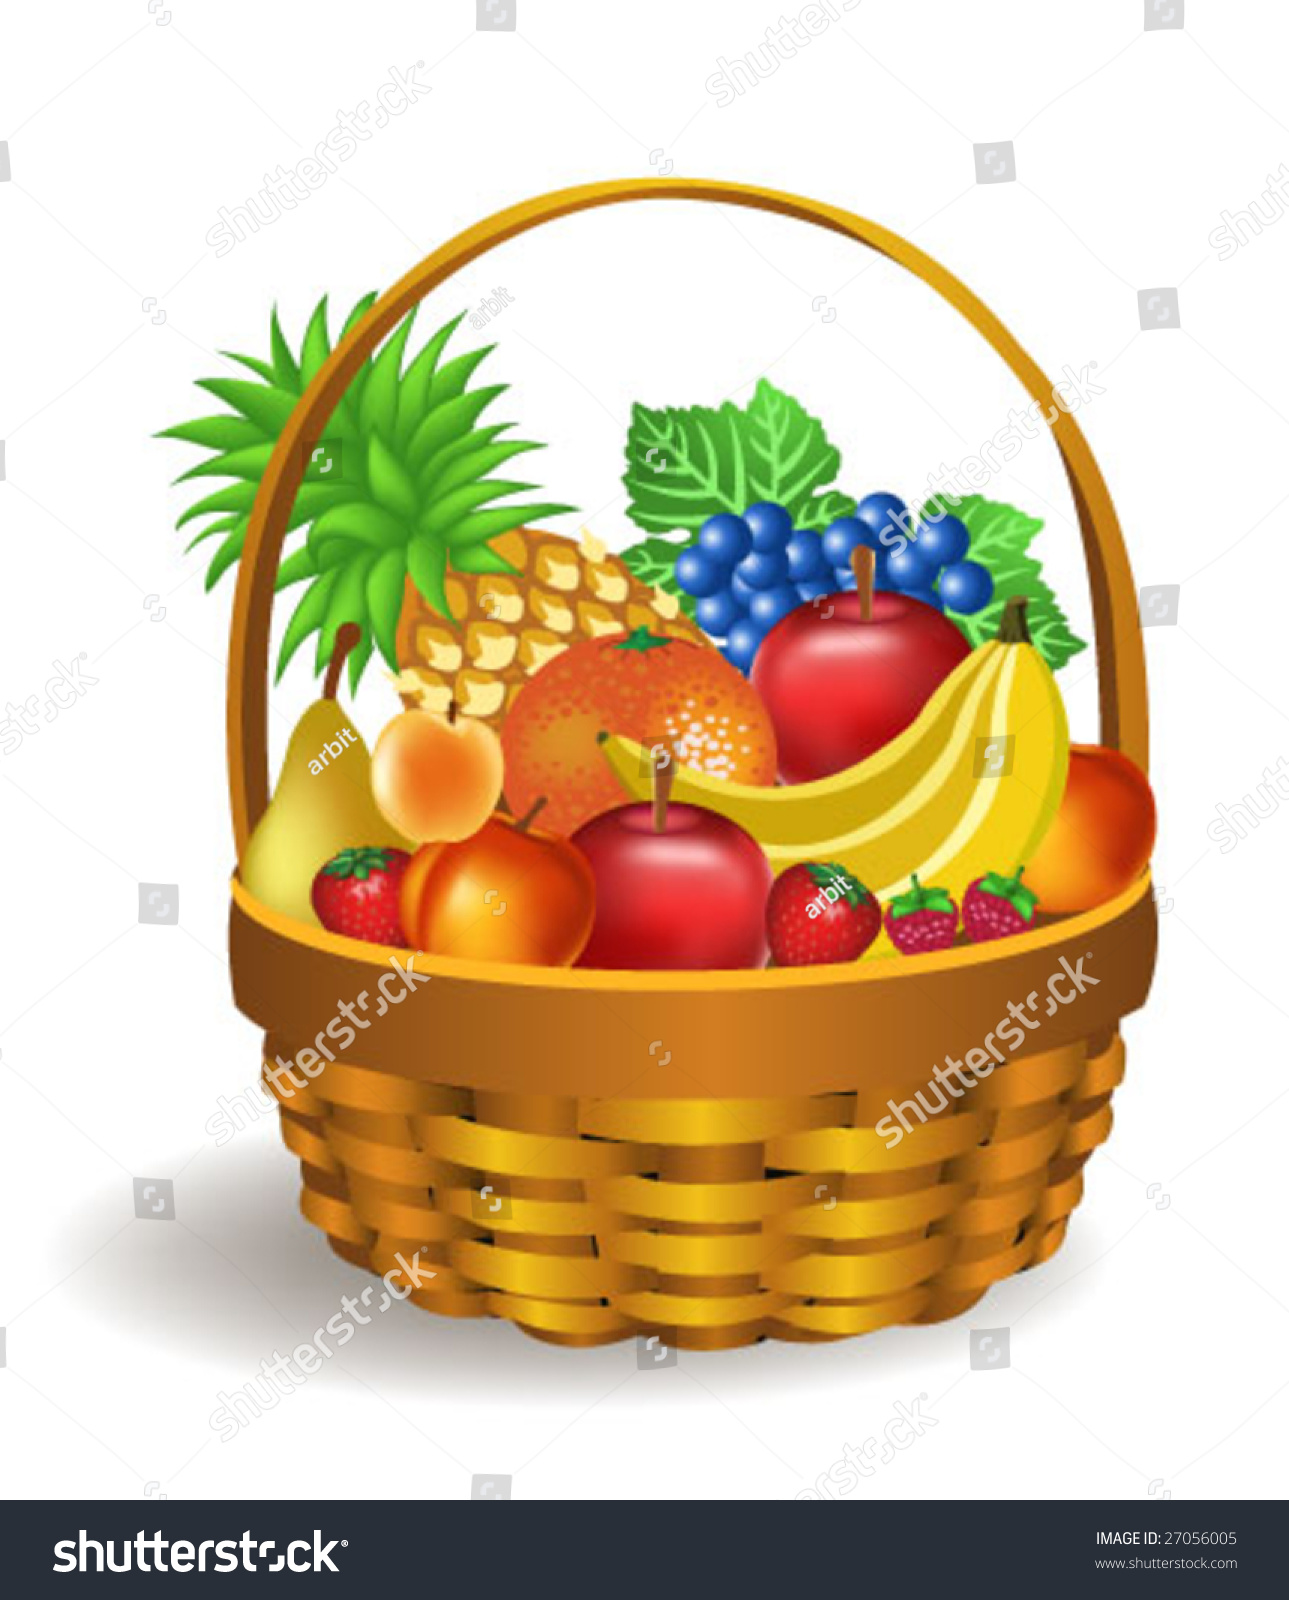 fruits basket clipart - photo #25